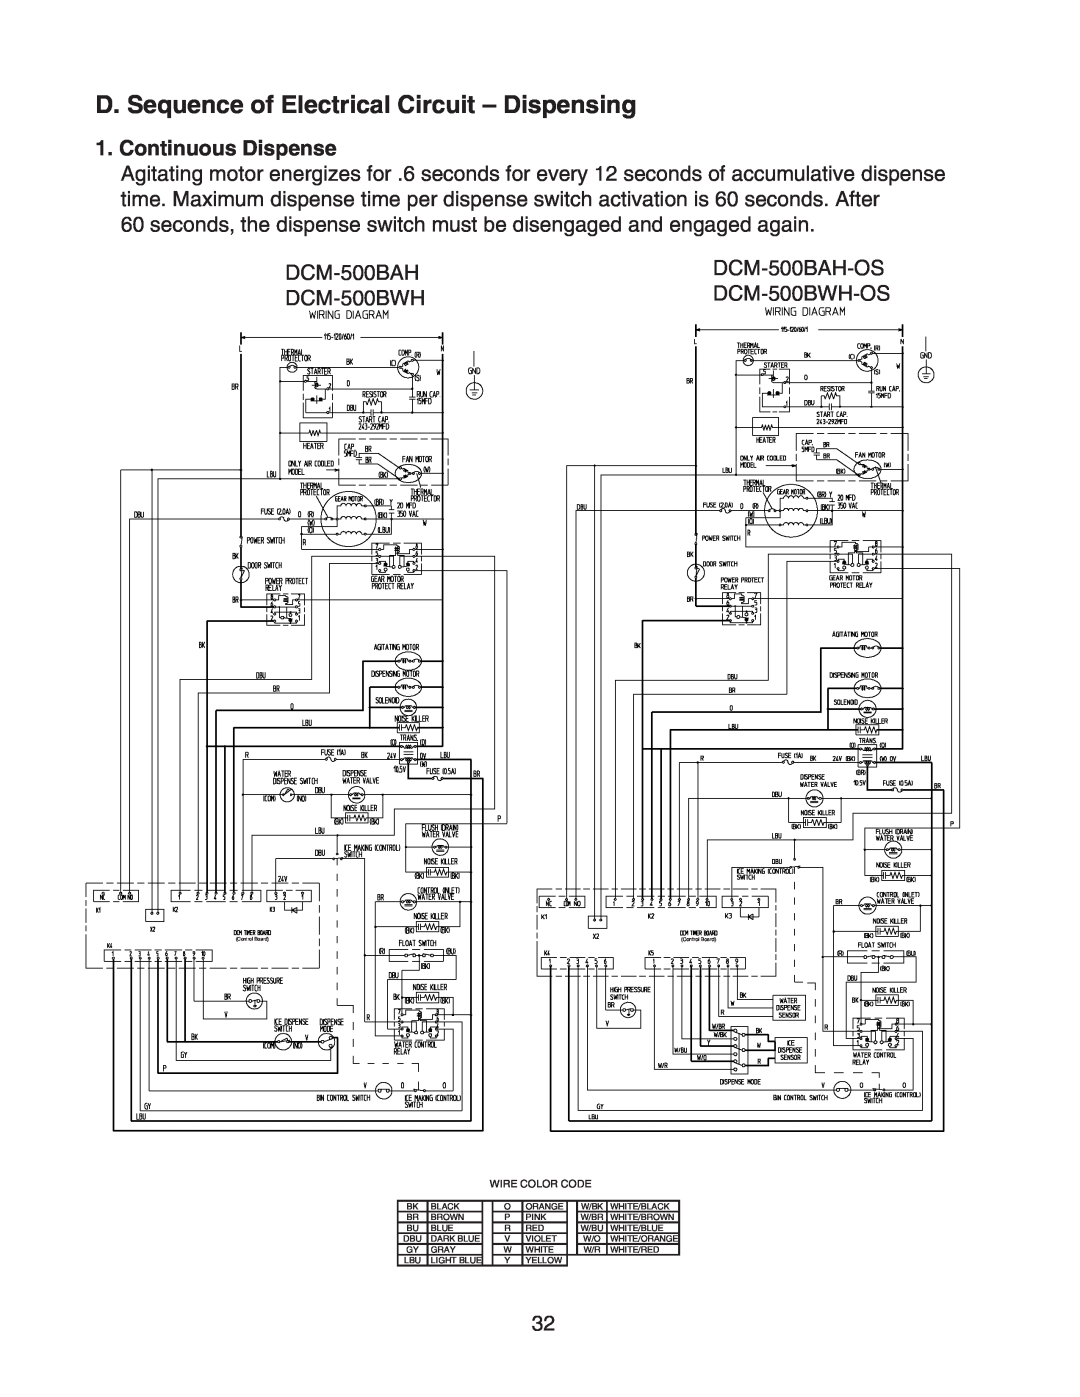 Hoshizaki DCM-500BWH-OS service manual D. Sequence of Electrical Circuit - Dispensing, Continuous Dispense 